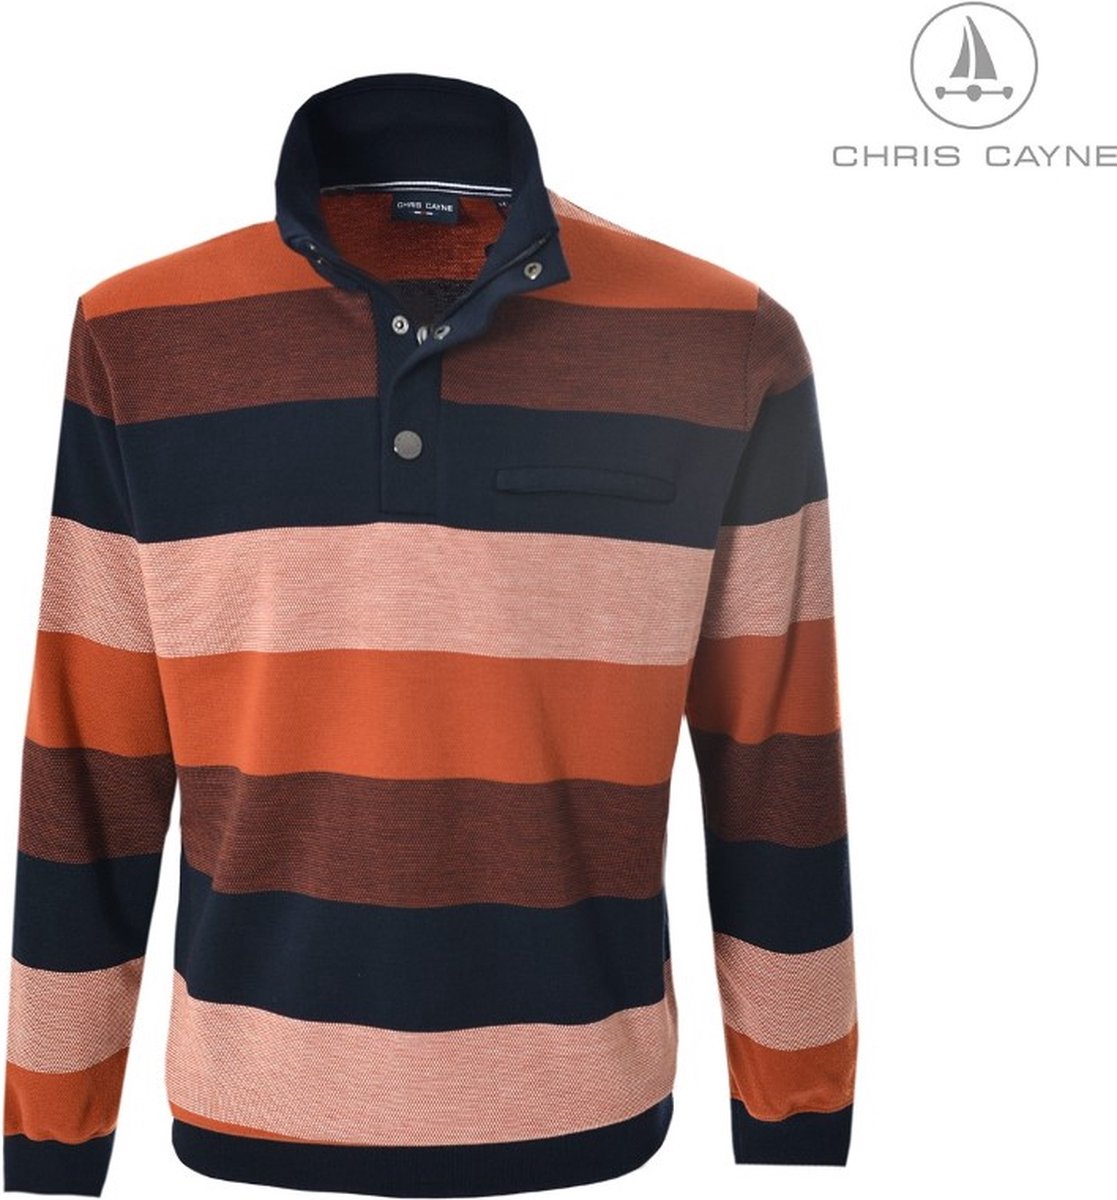 Chris Cayne heren trui - heren sweater met polokraag - borstzak - oranje/blauw streep - maat XXL